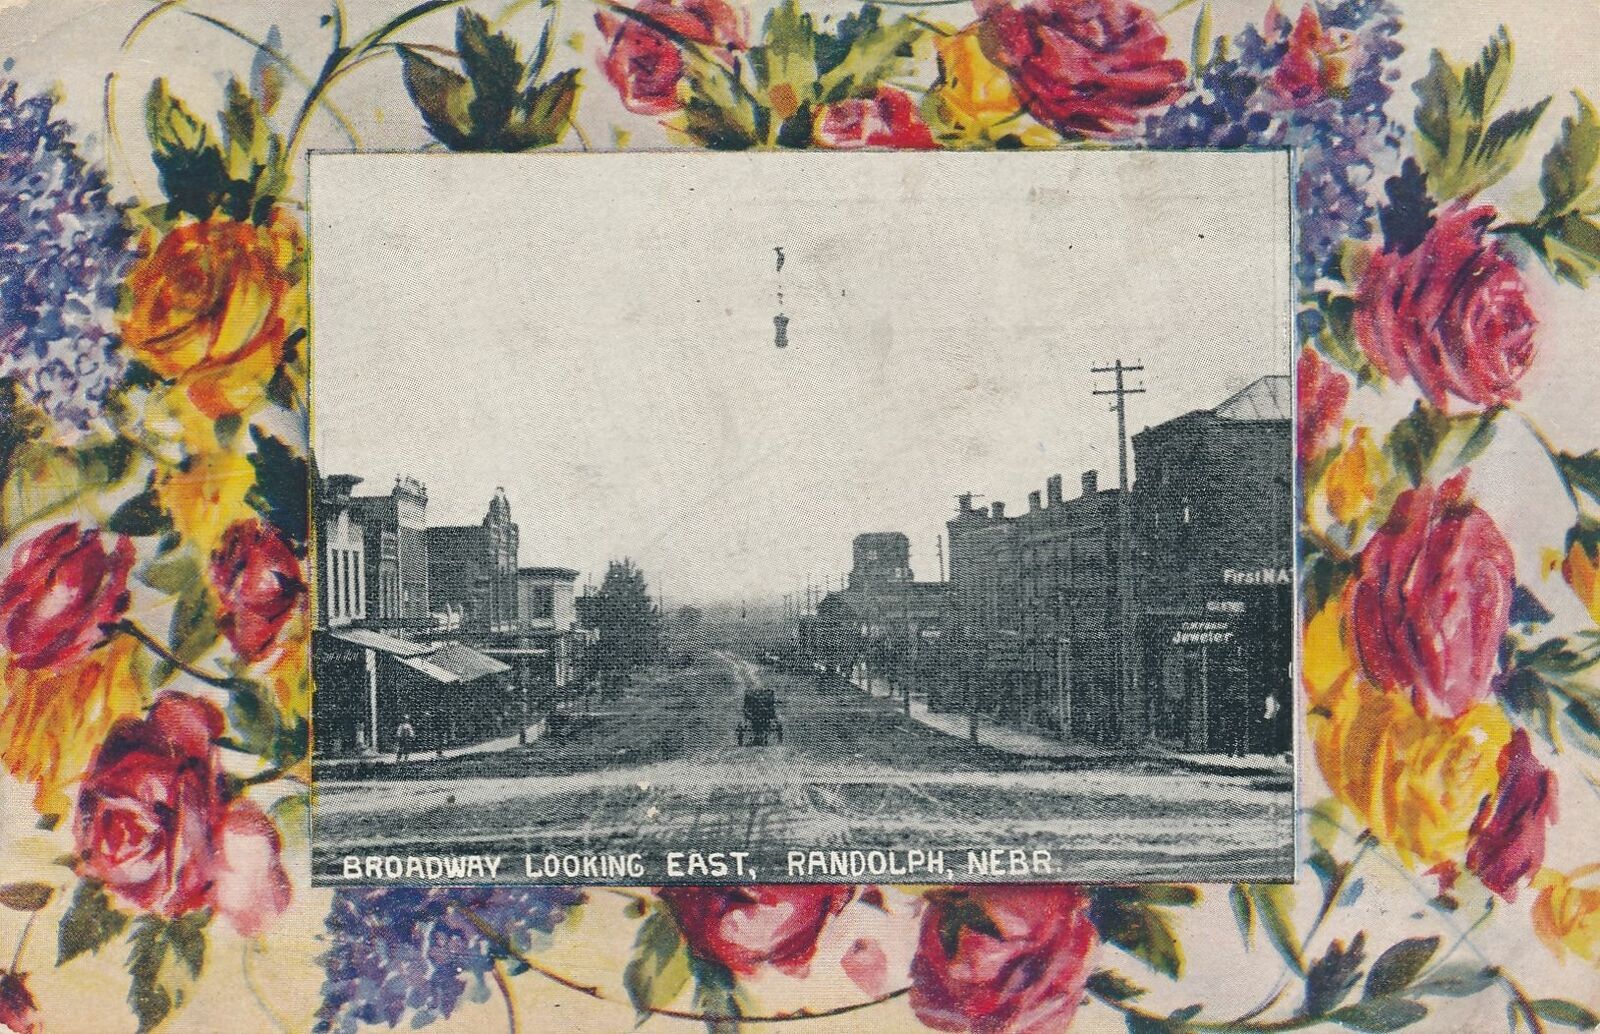 RANDOLPH NE - Broadway Looking East - 1911